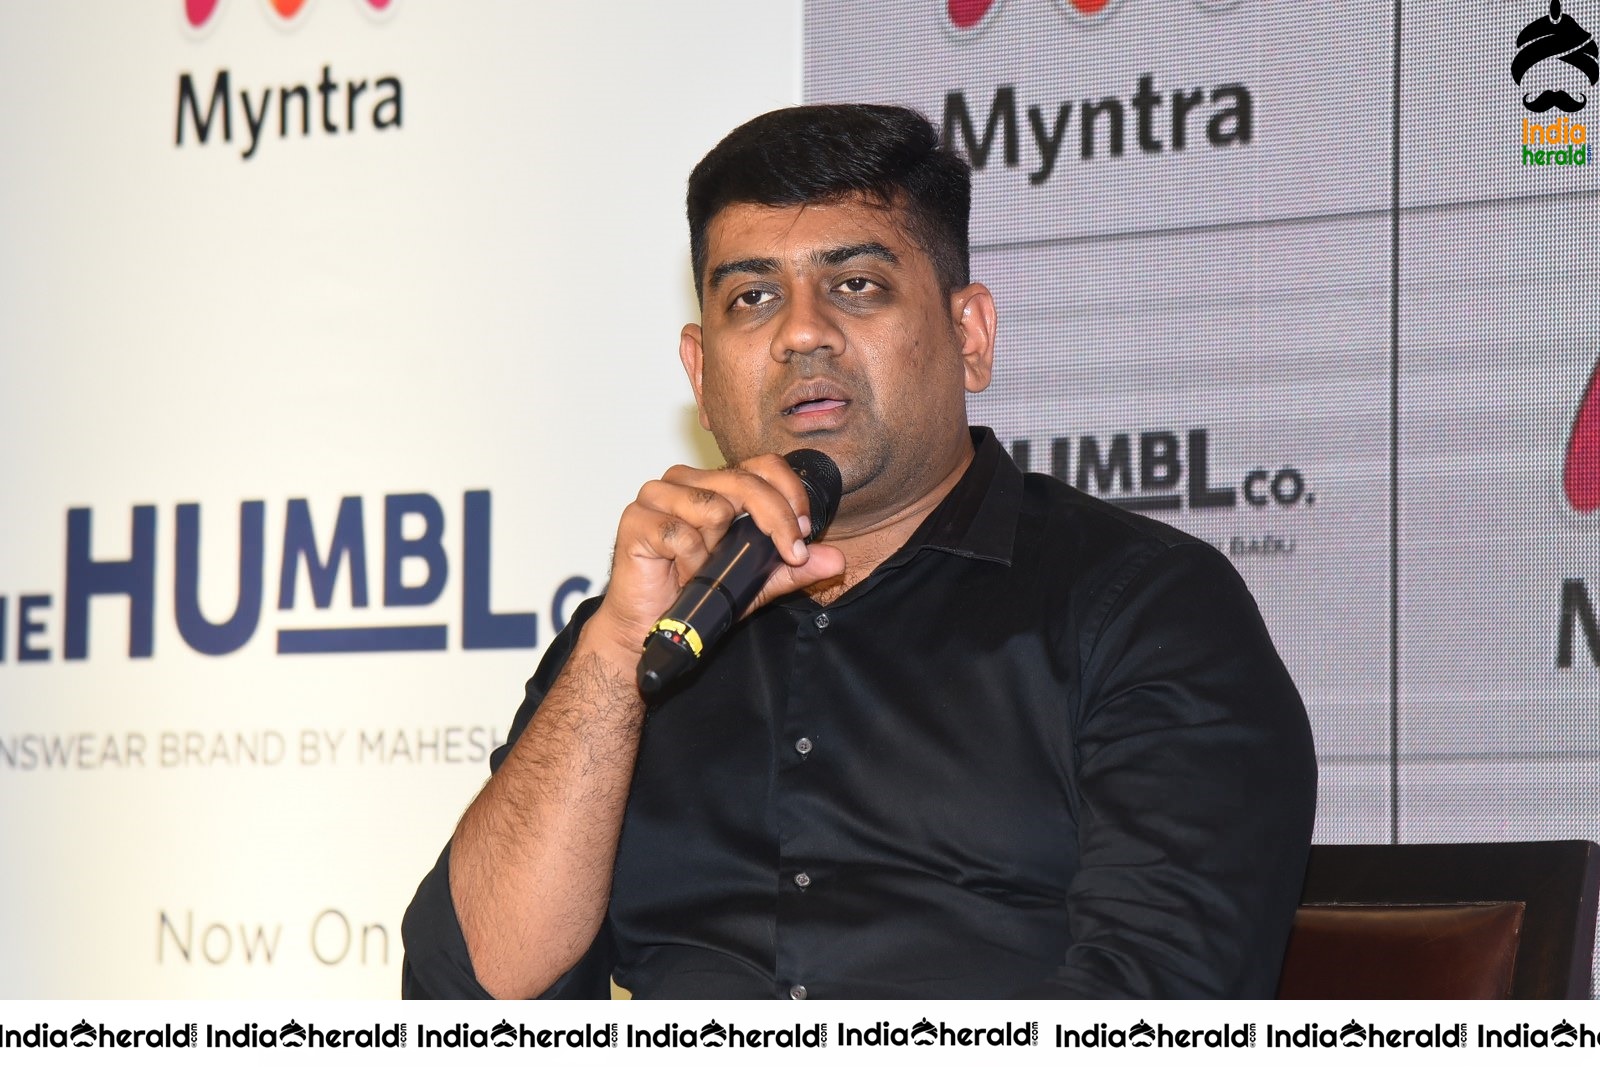 Mahesh Babu Launches His Apparel Brand The Humbl co On Myntra Set 6